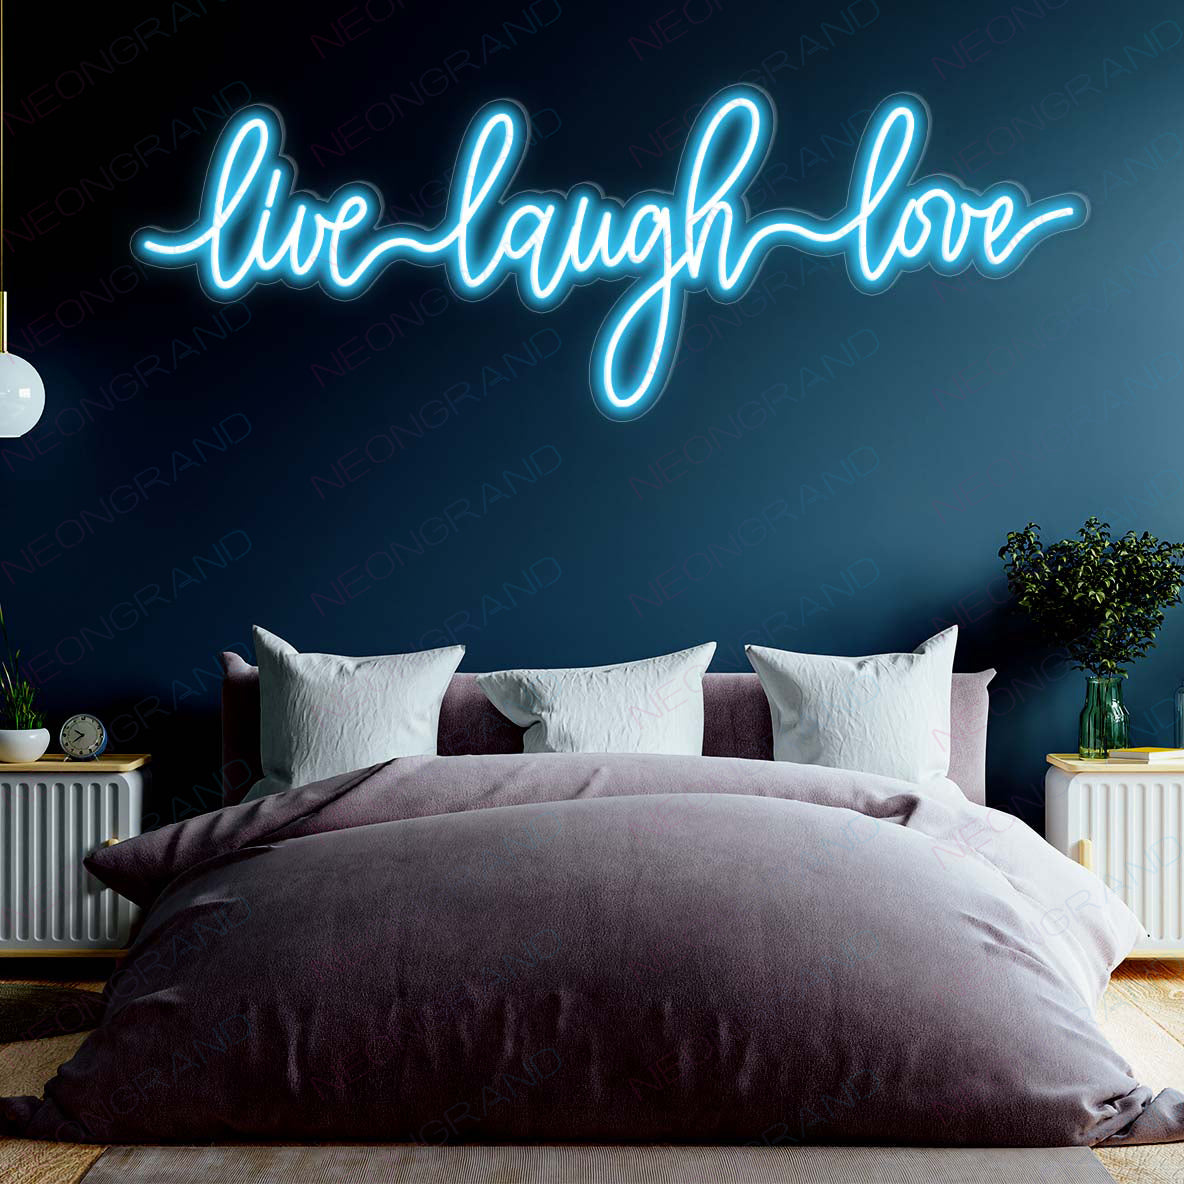 Live Laugh Love Neon Sign Led Light light blue